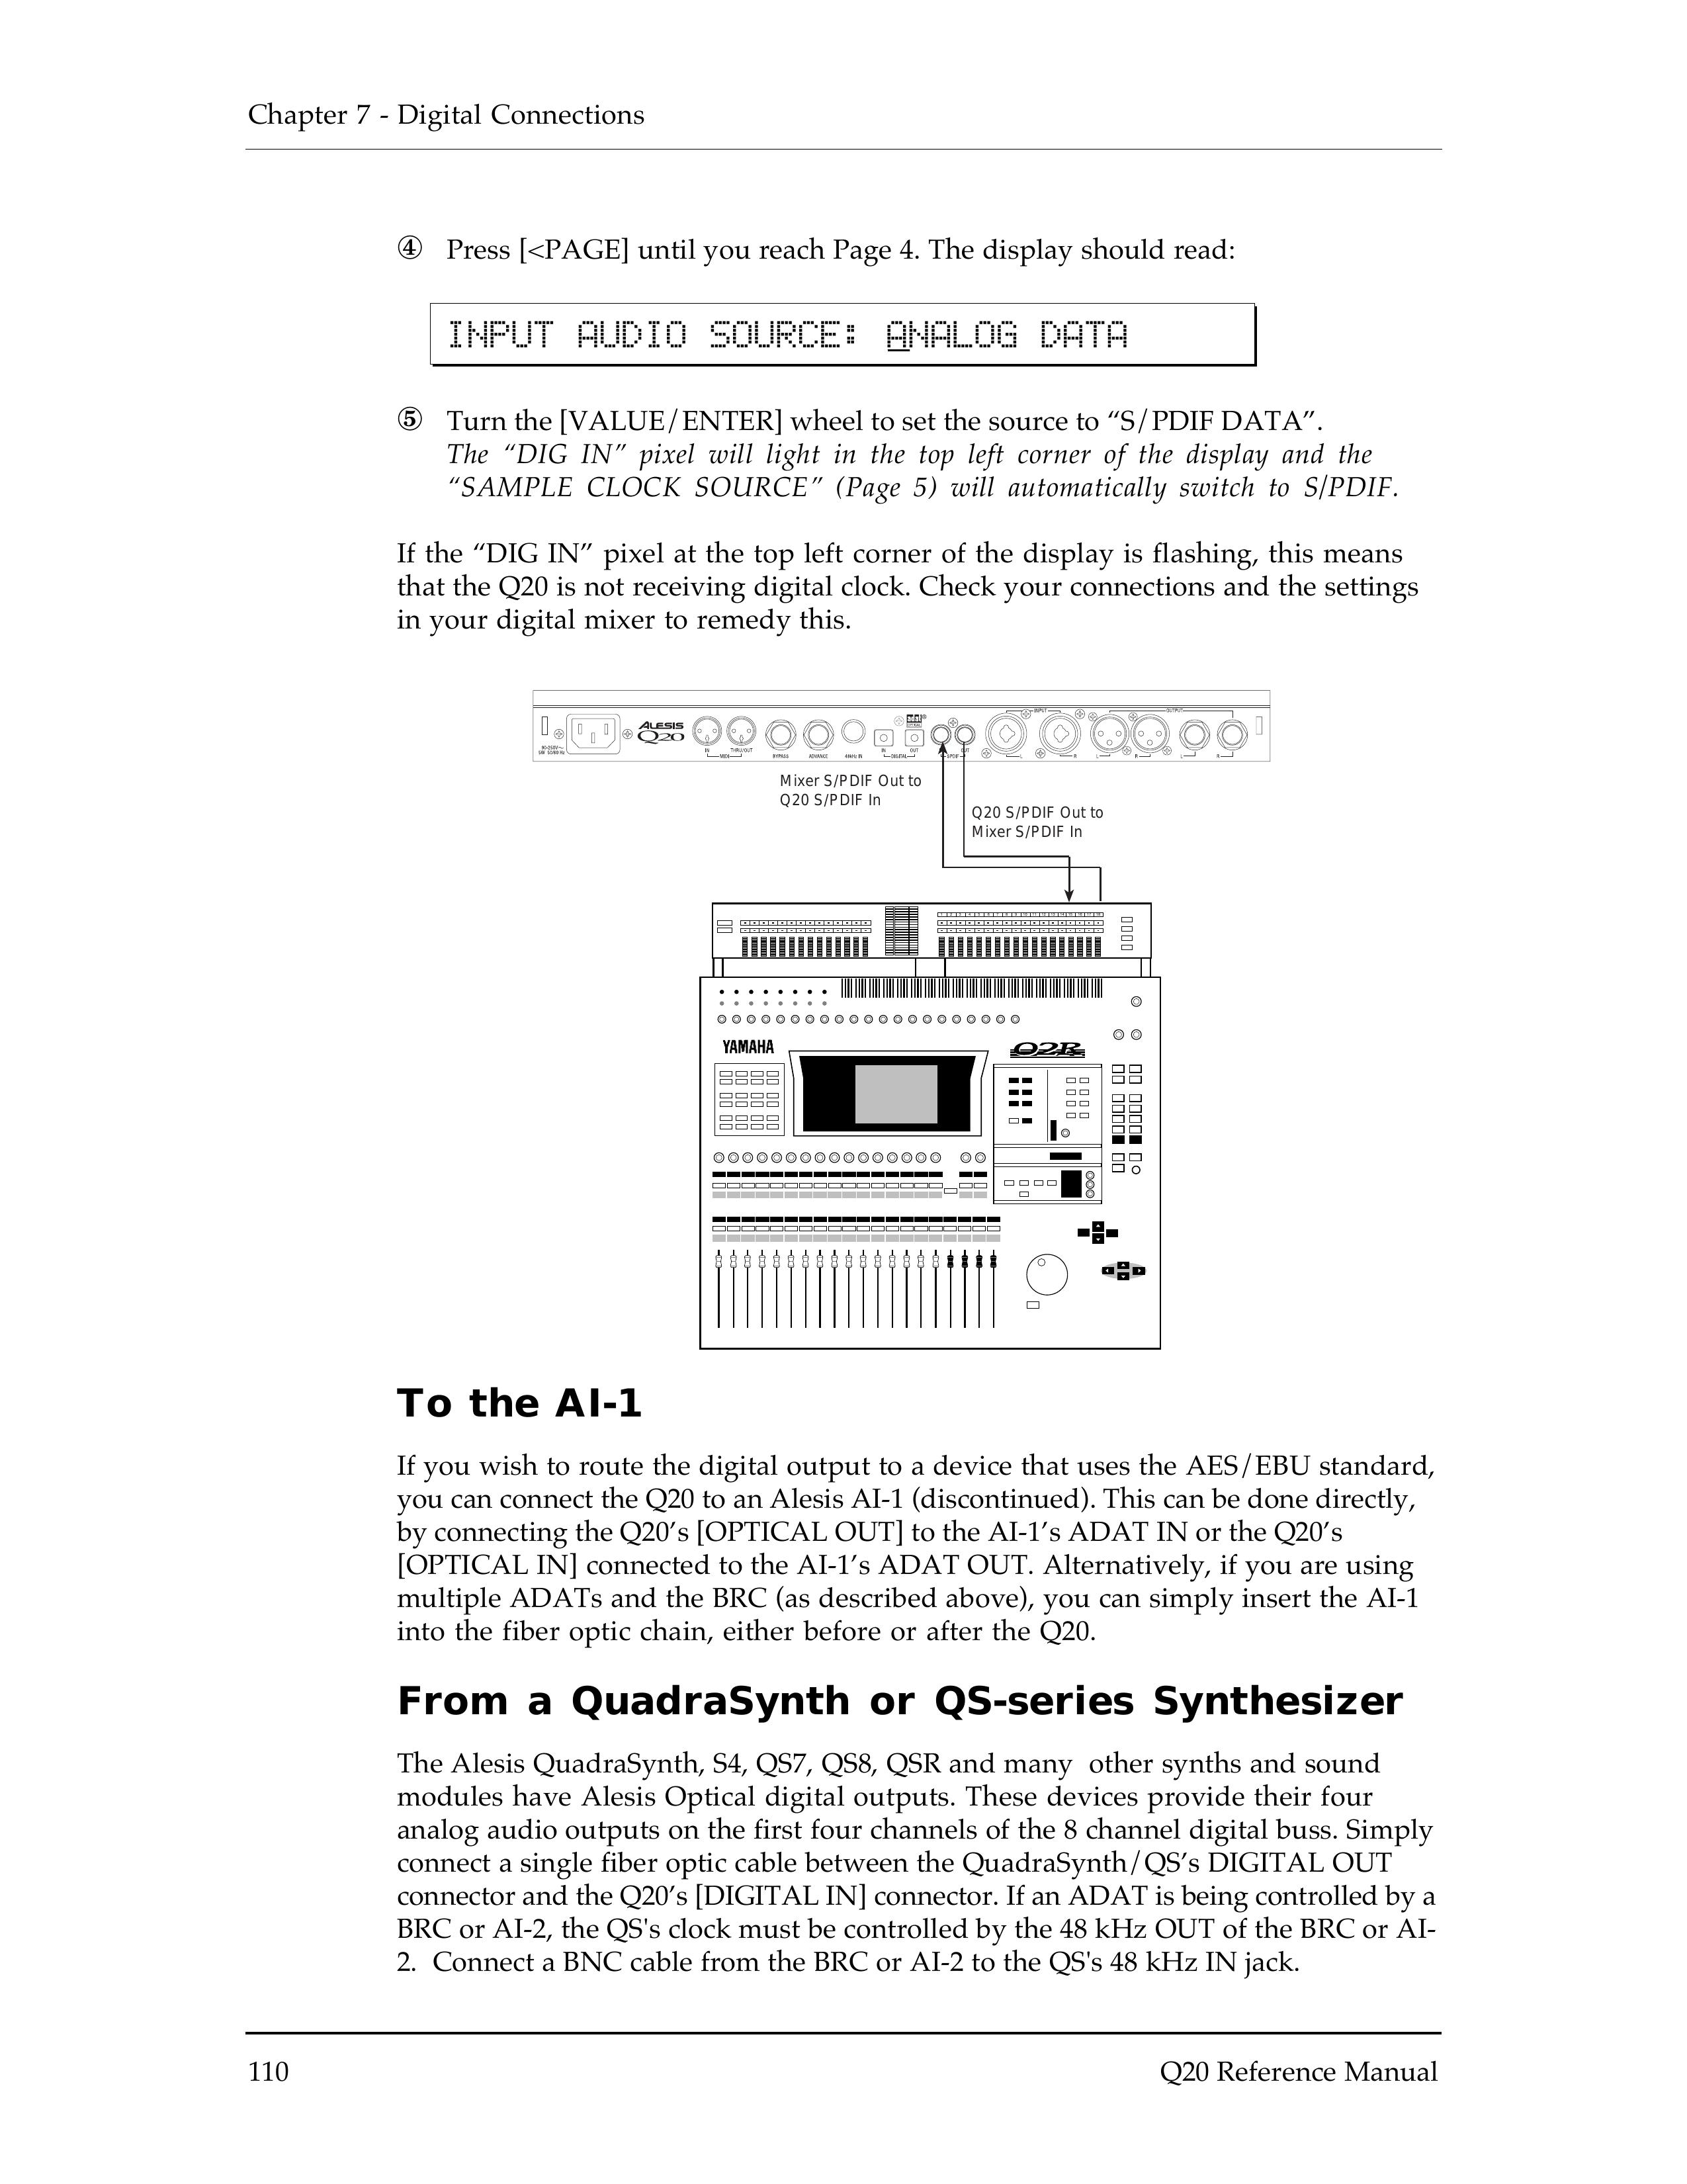 Alesis Q20 DJ Equipment User Manual (Page 112)